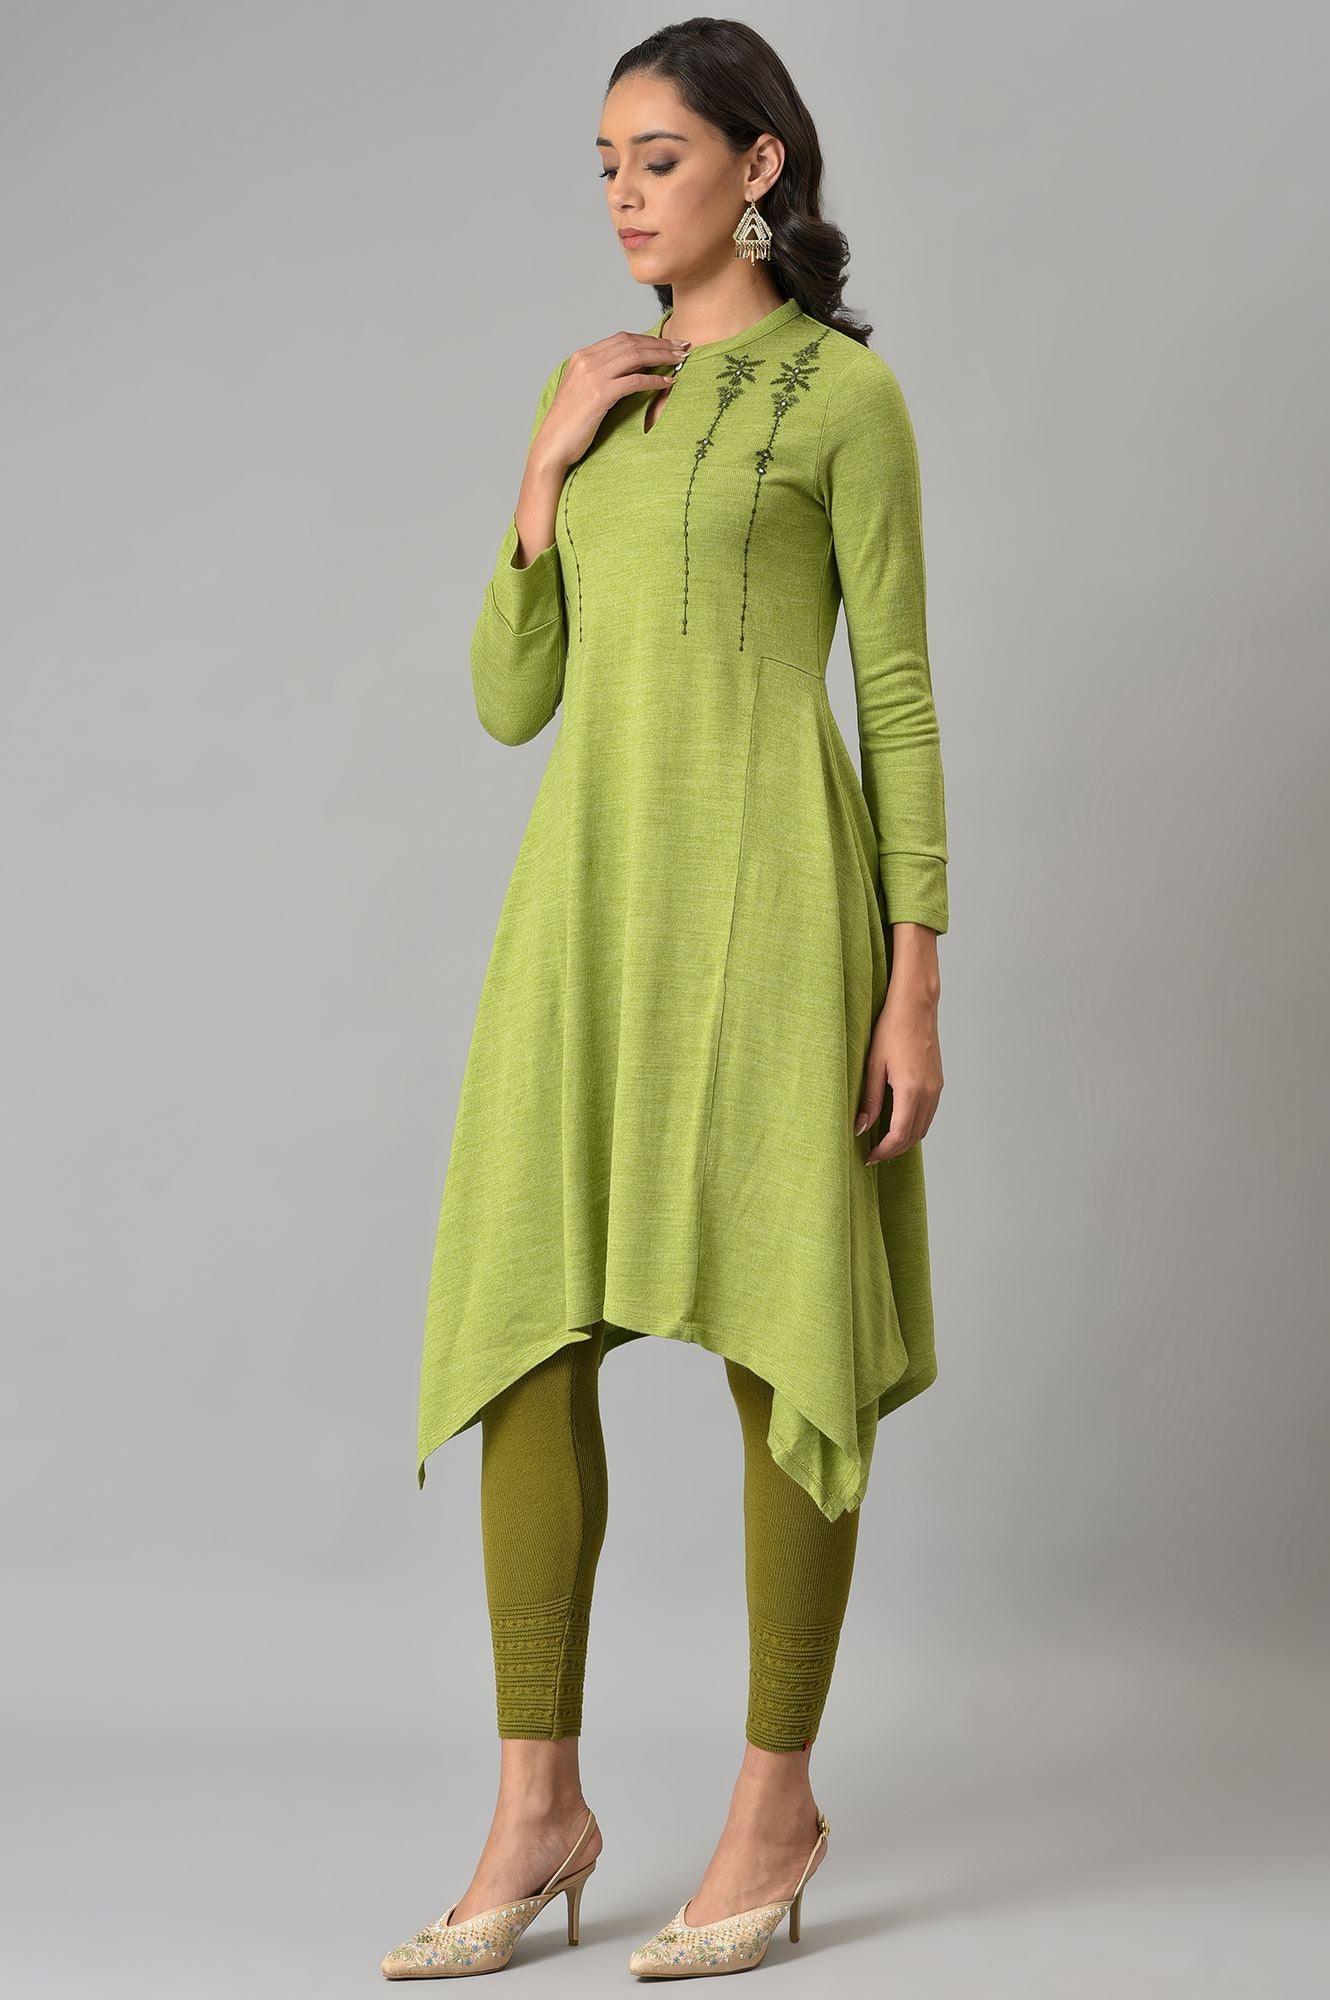 Green A-Line Embroidered Plus Size Winter Kurta - wforwoman